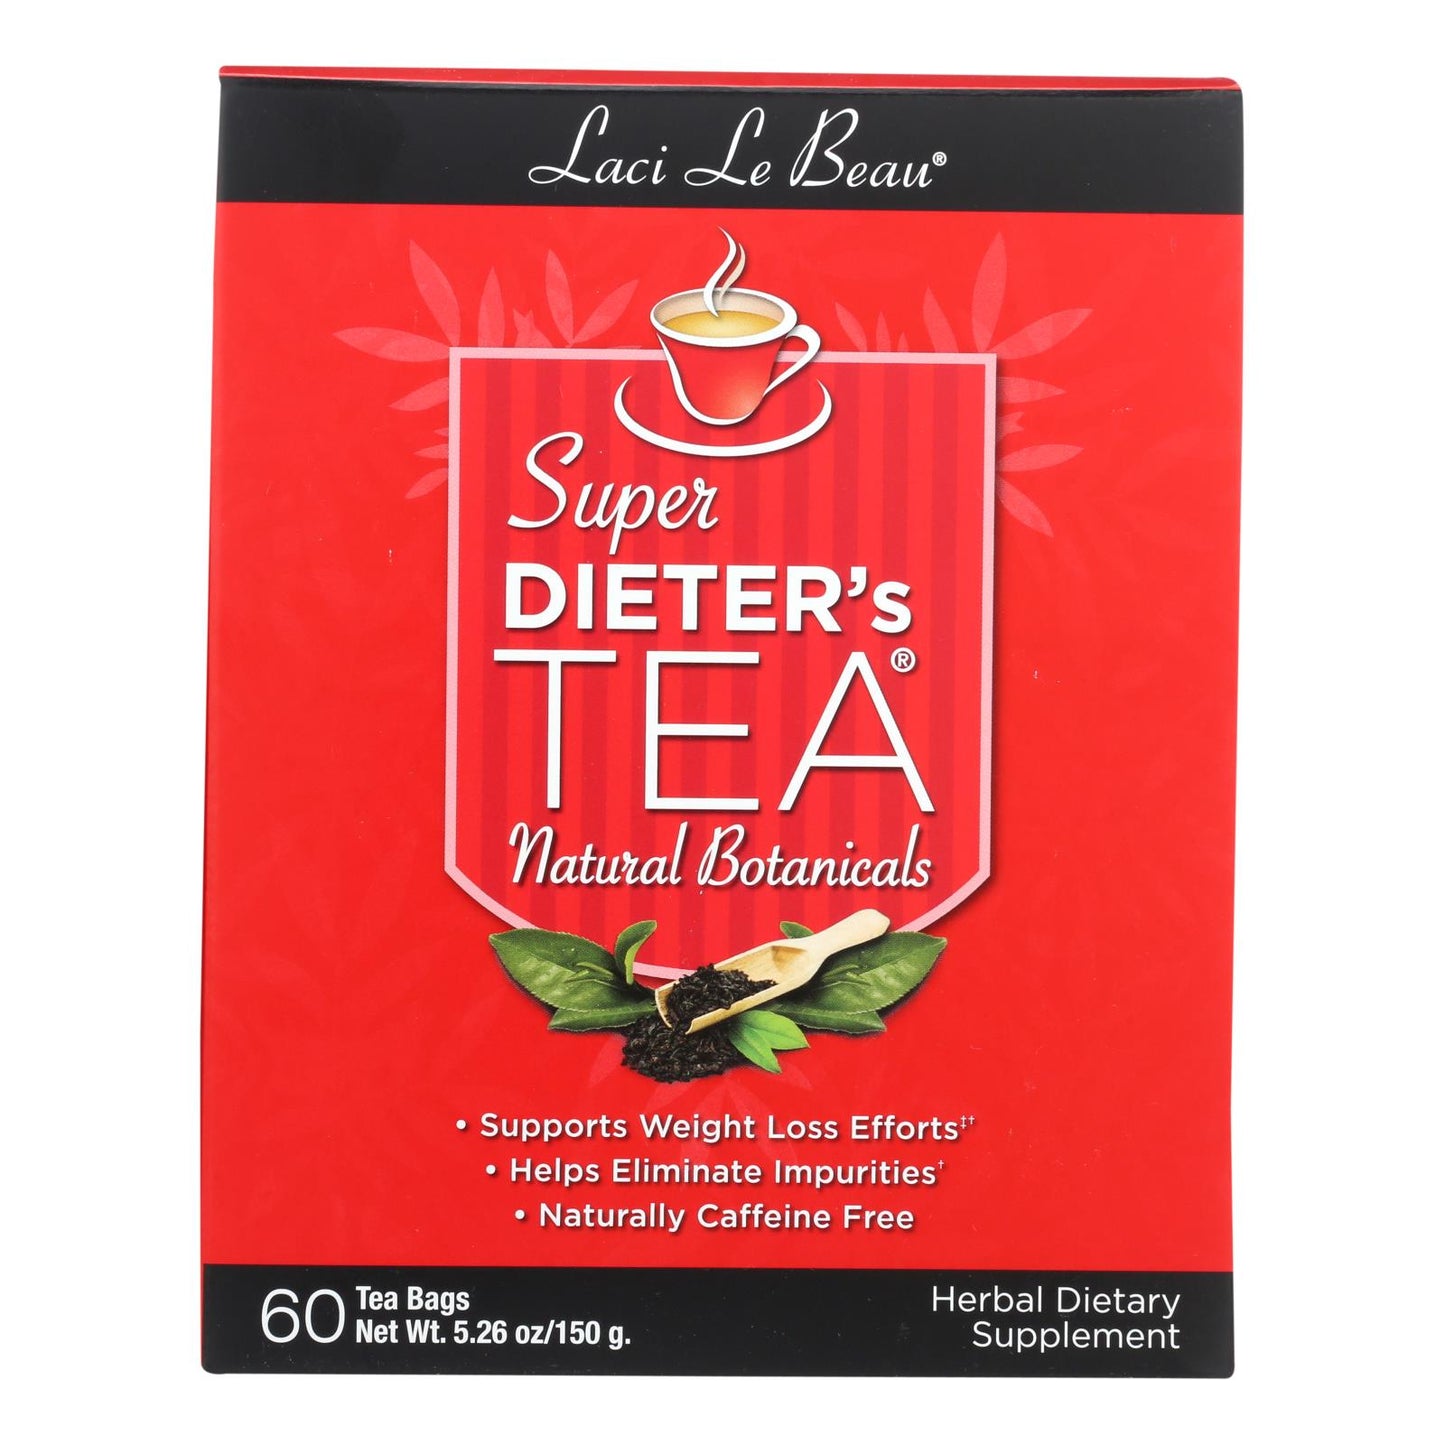 Laci Le Beau Super Dieter's Tea All Natural Botanicals - 60 Tea Bags